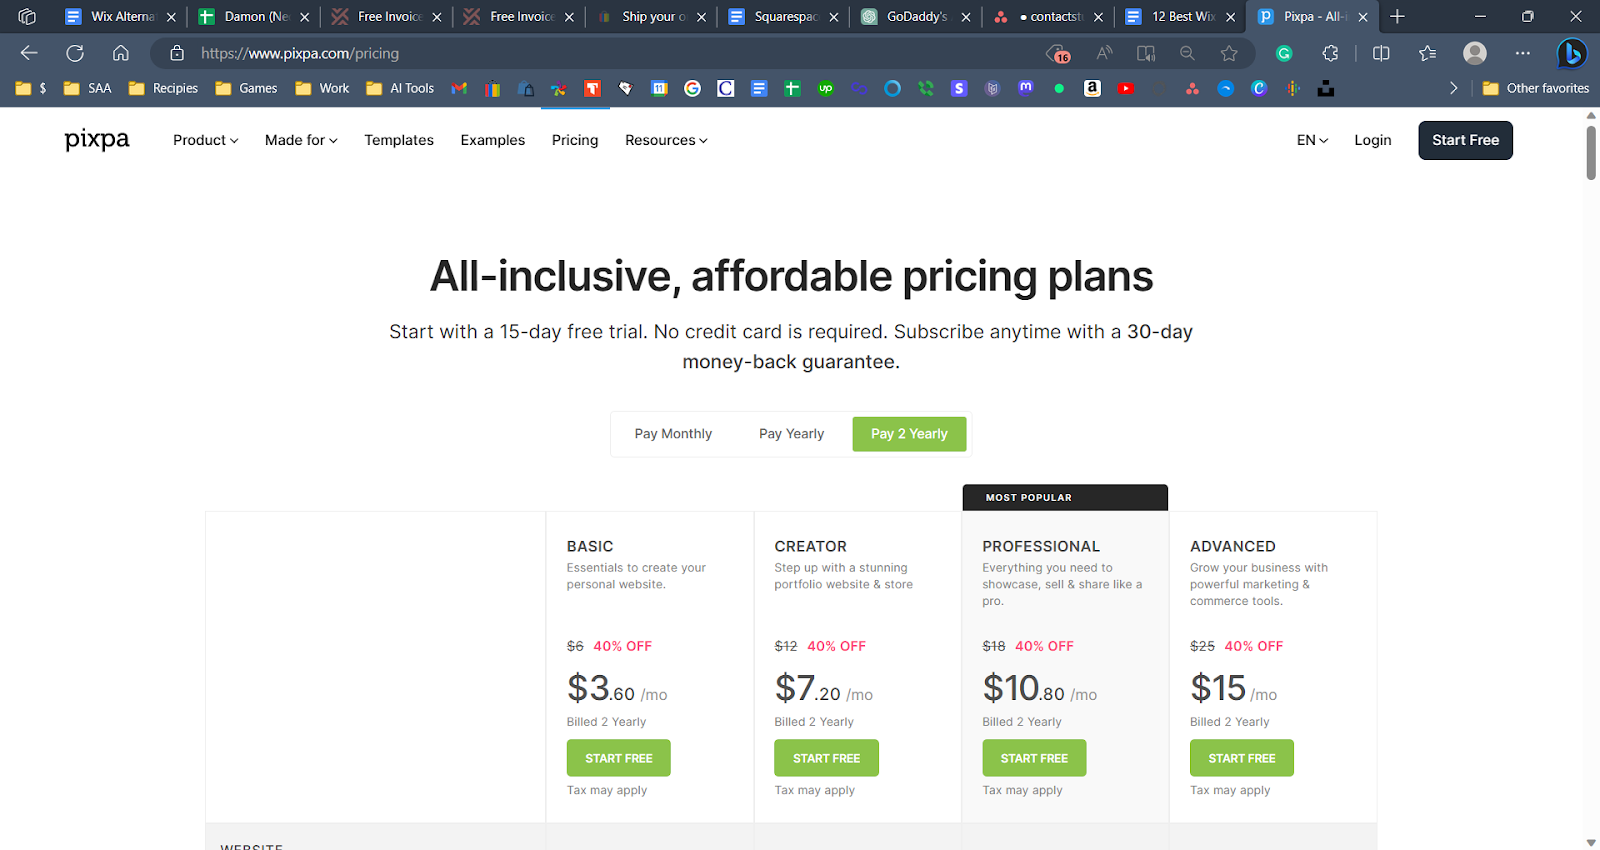 a screenshot of Pixpa's pricing plans